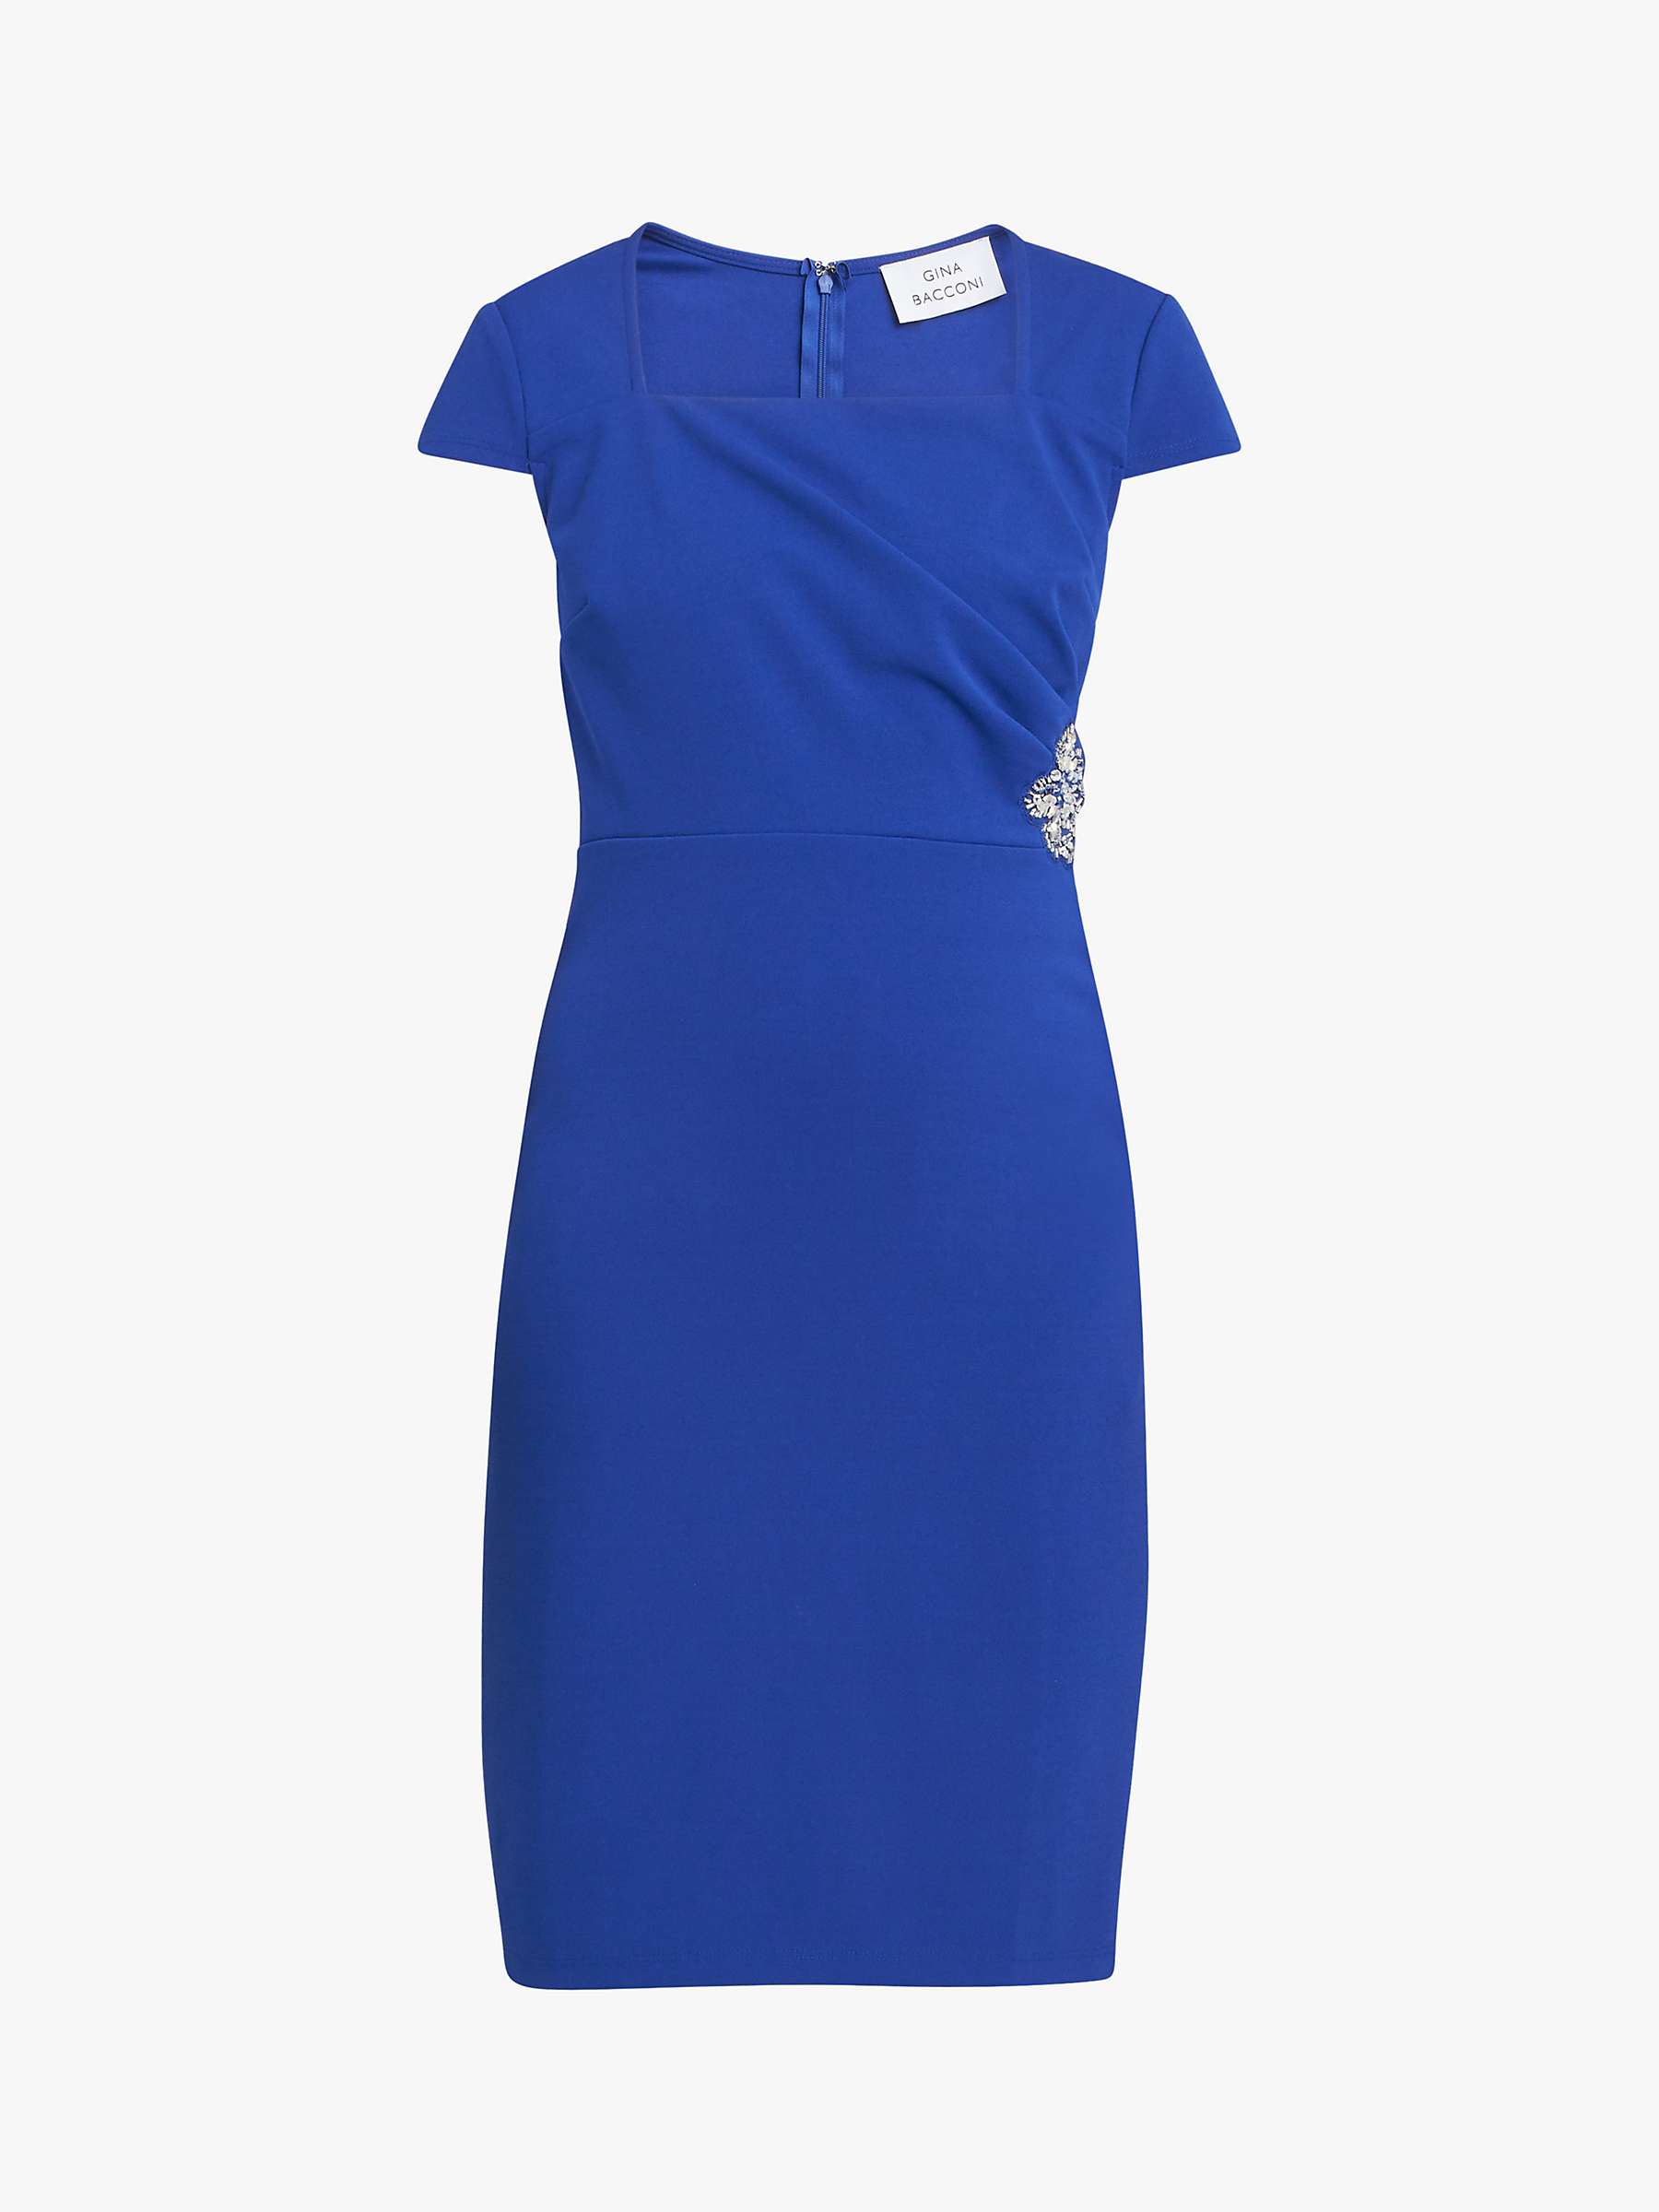 Buy Gina Bacconi Briah Square Neck Crepe Shift Dress, Cosmic Blue Online at johnlewis.com